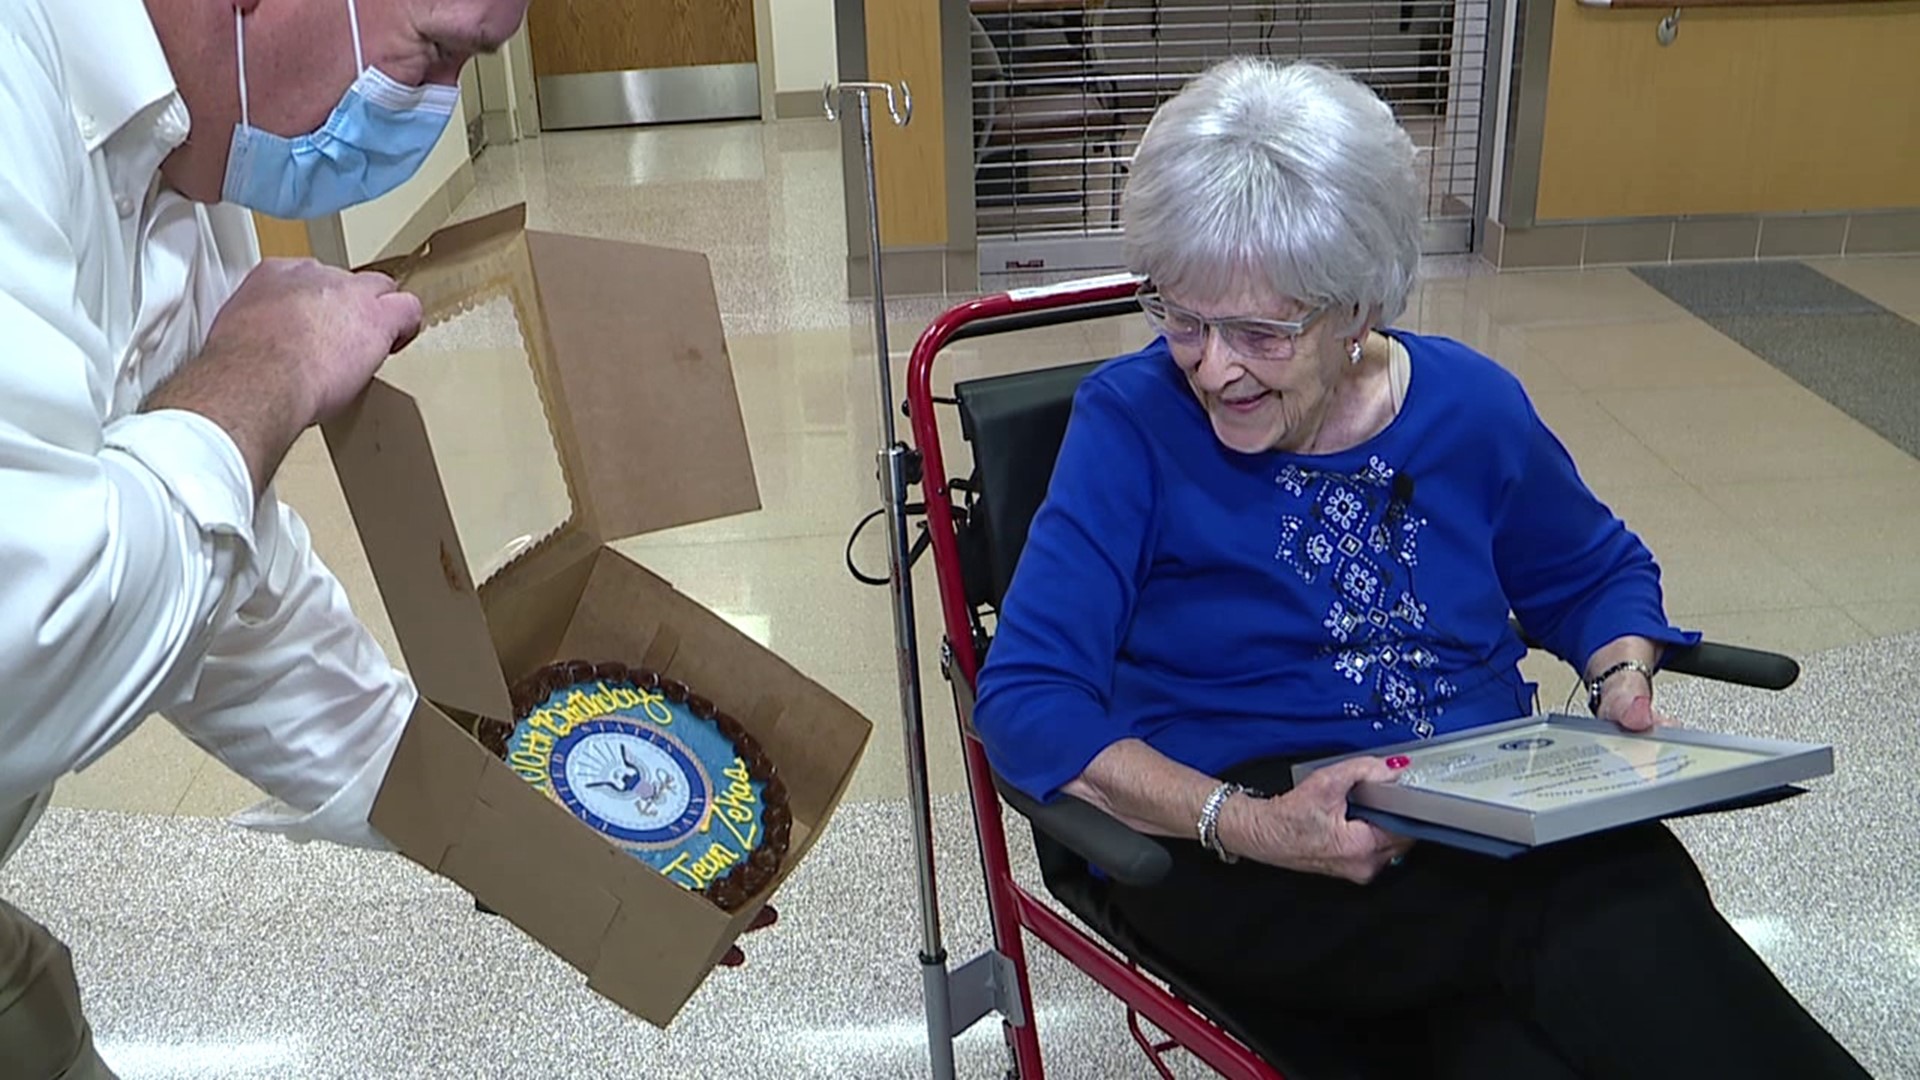 Dorothea Zekas celebrated her milestone birthday Friday at the VA Medical Center in Wilkes-Barre.